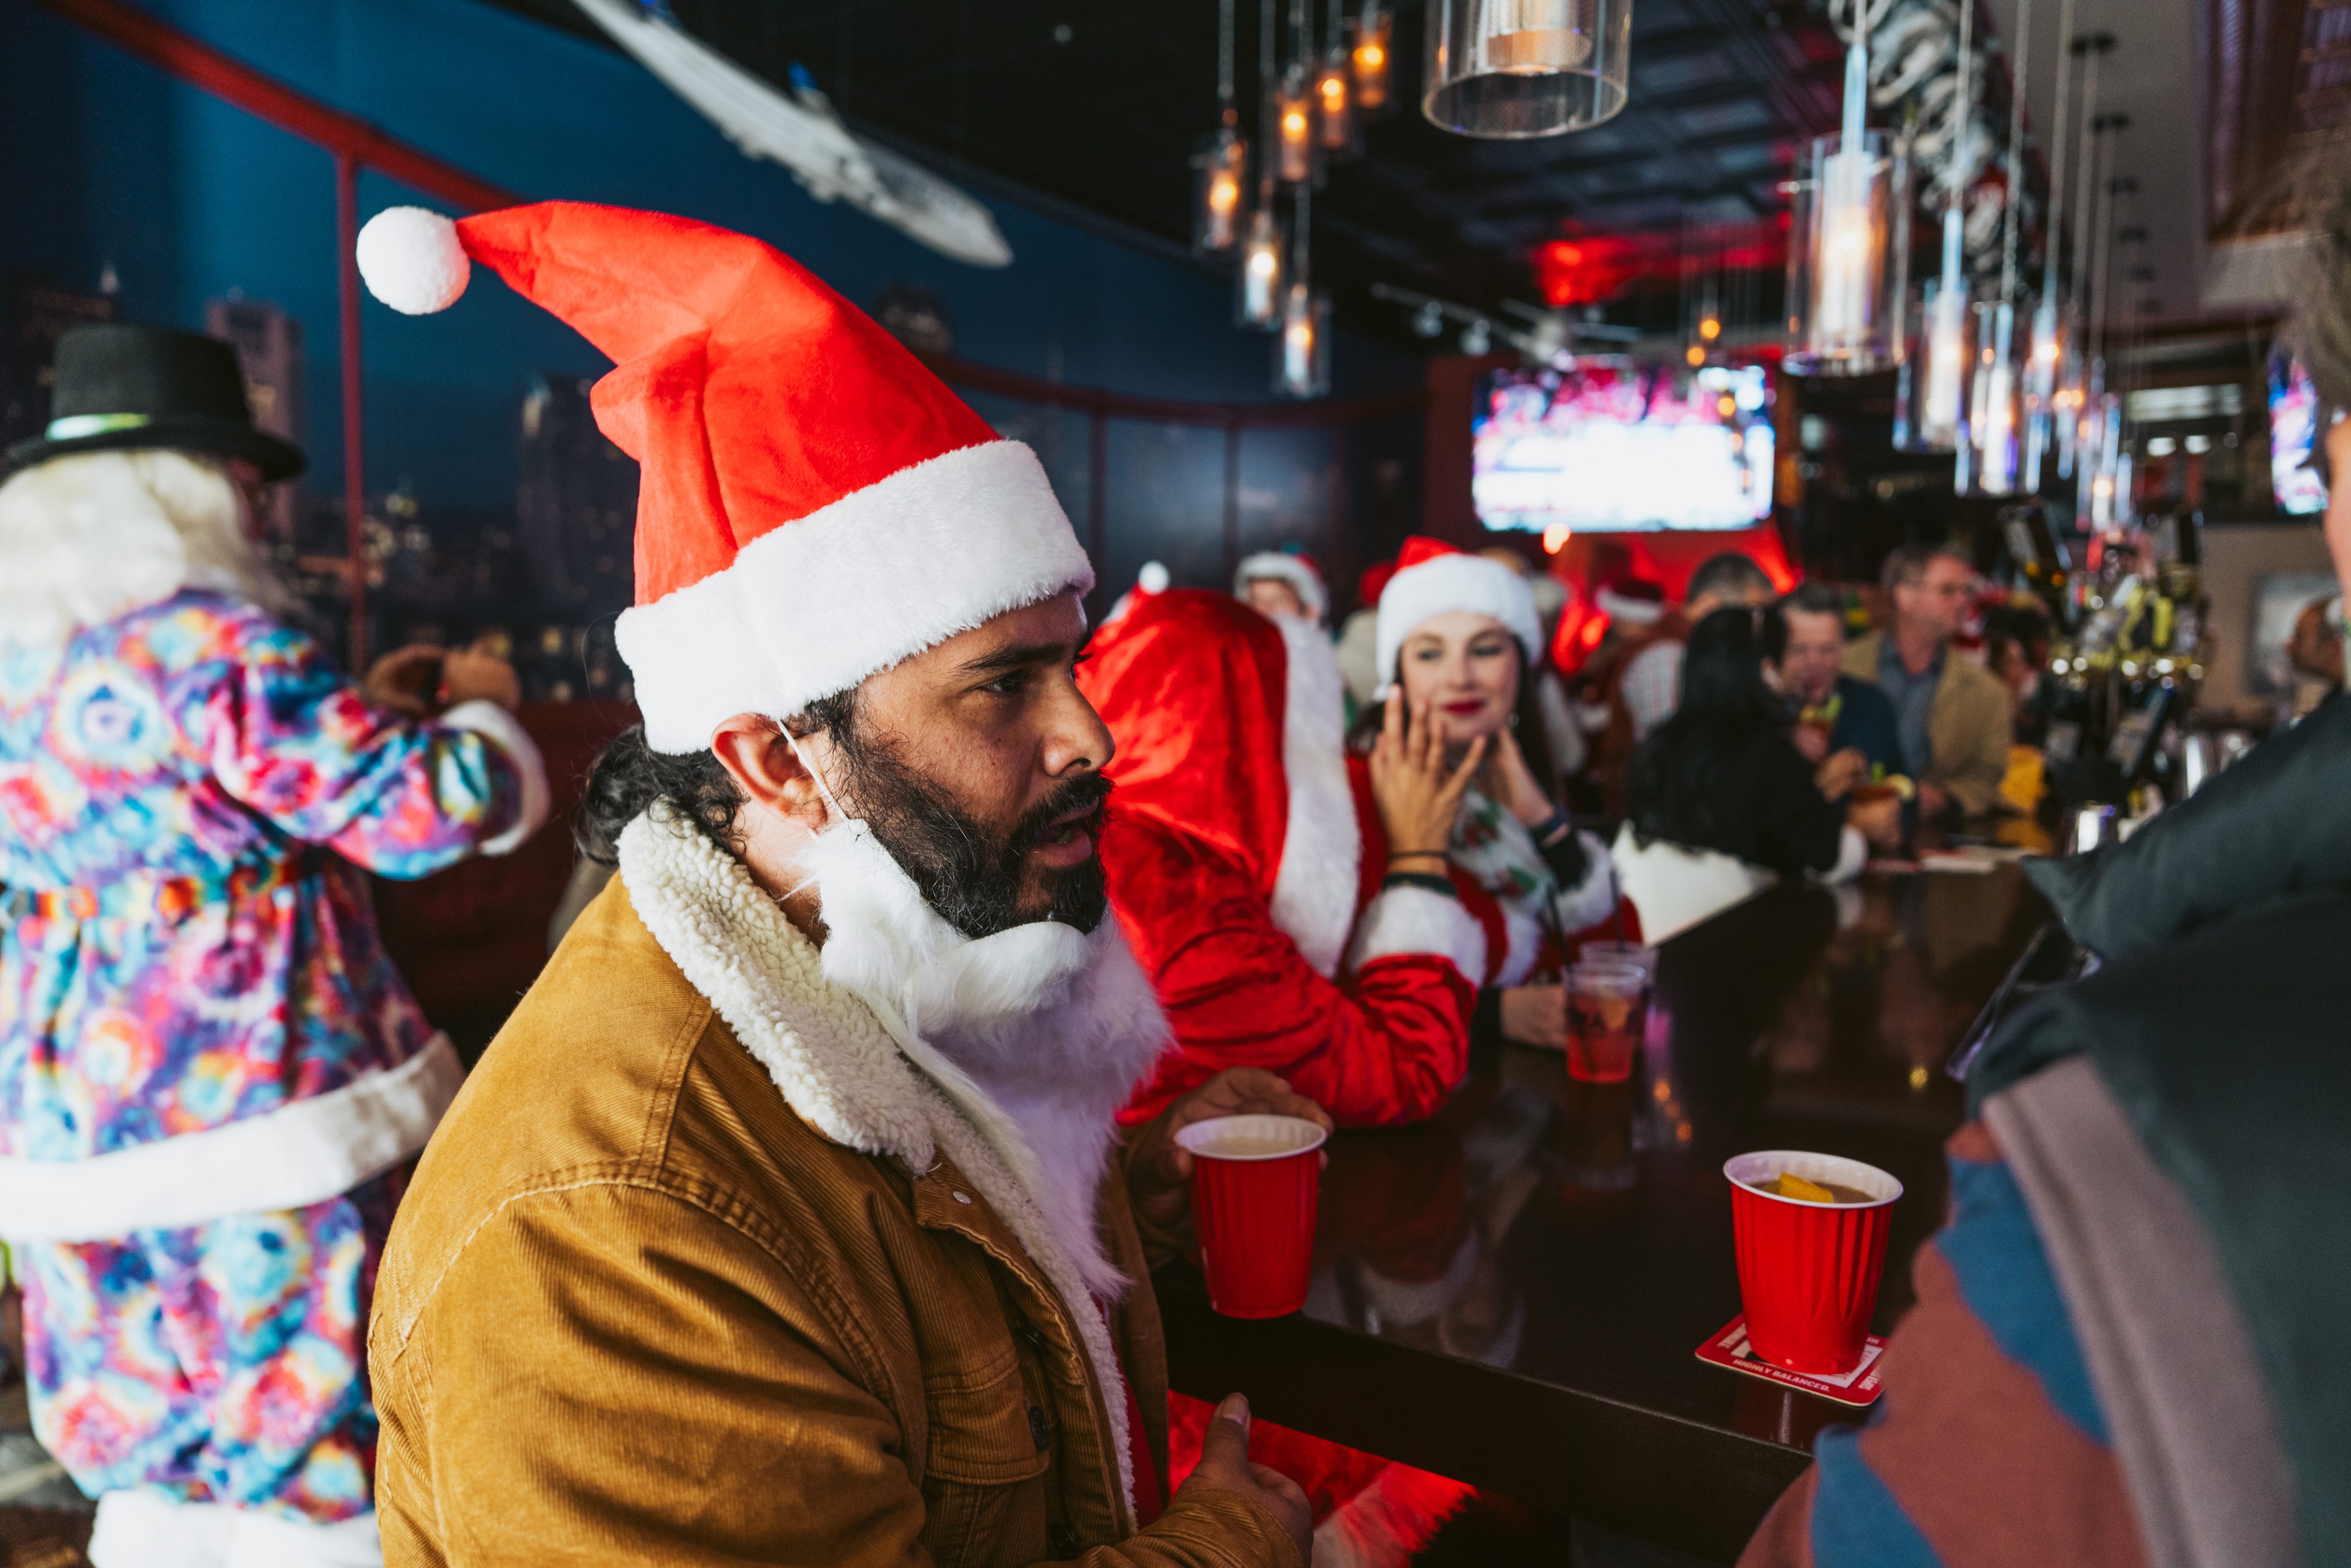 A man in a Santa hat and fake white beard talks to patrons at a bar.